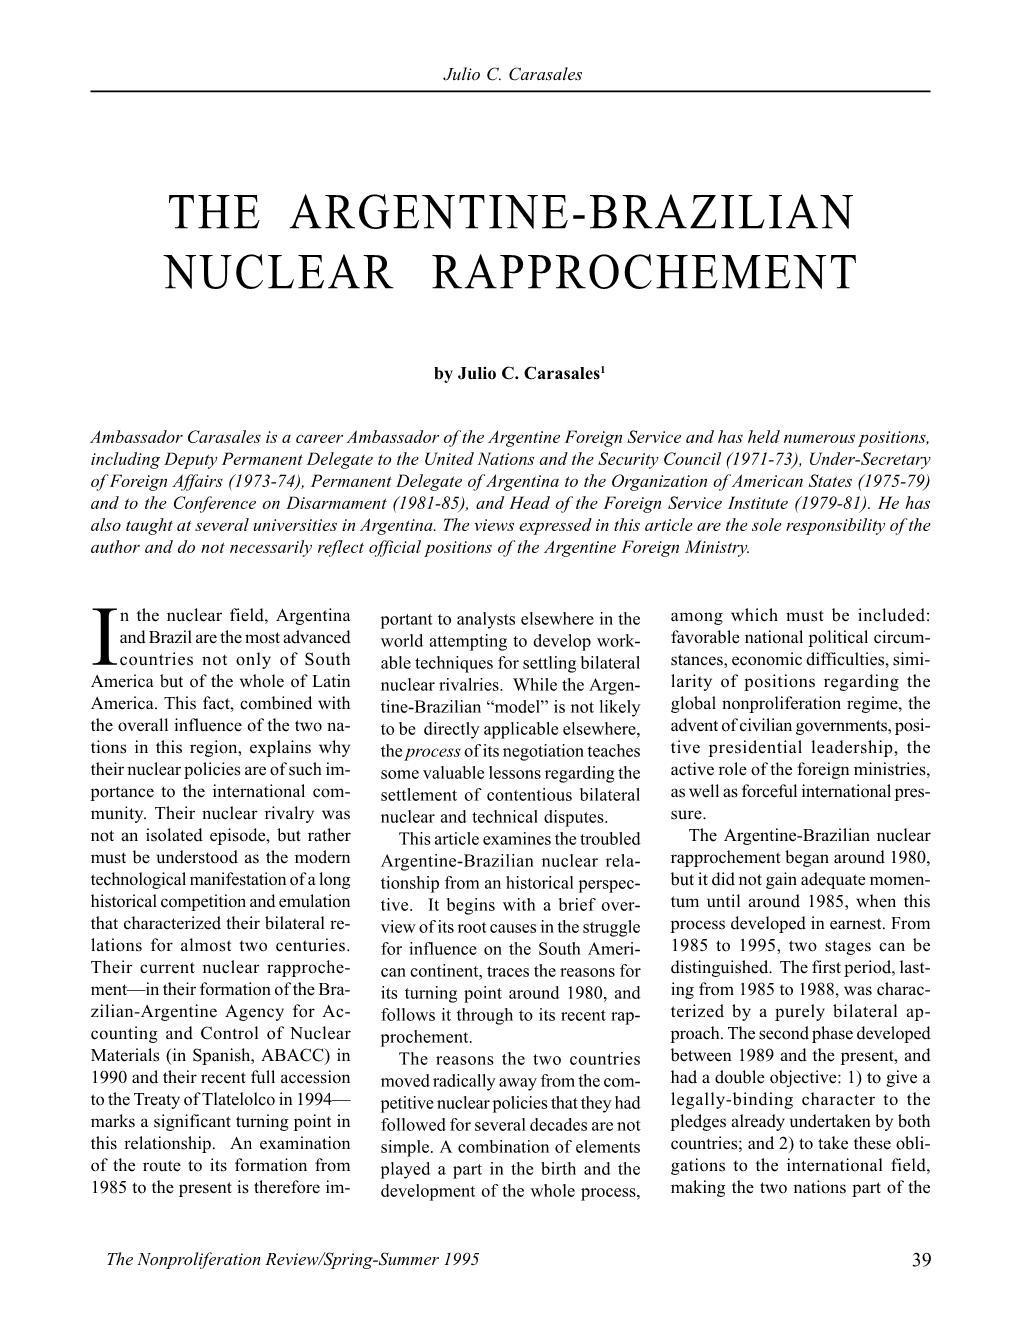 The Argentine-Brazilian Nuclear Rapprochement